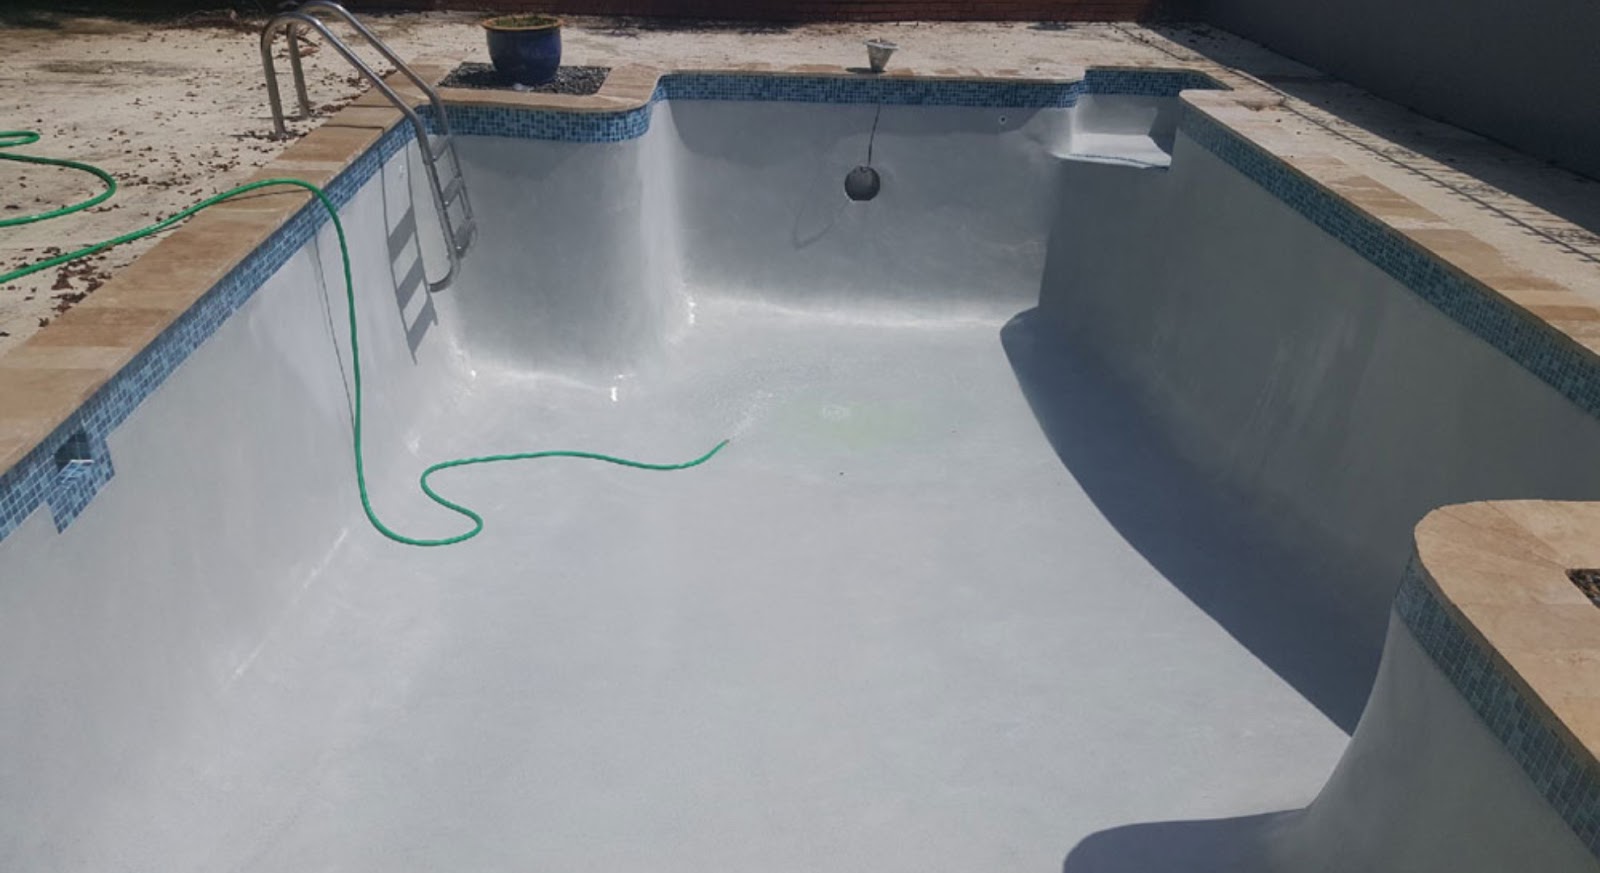 Pool Resurfacing